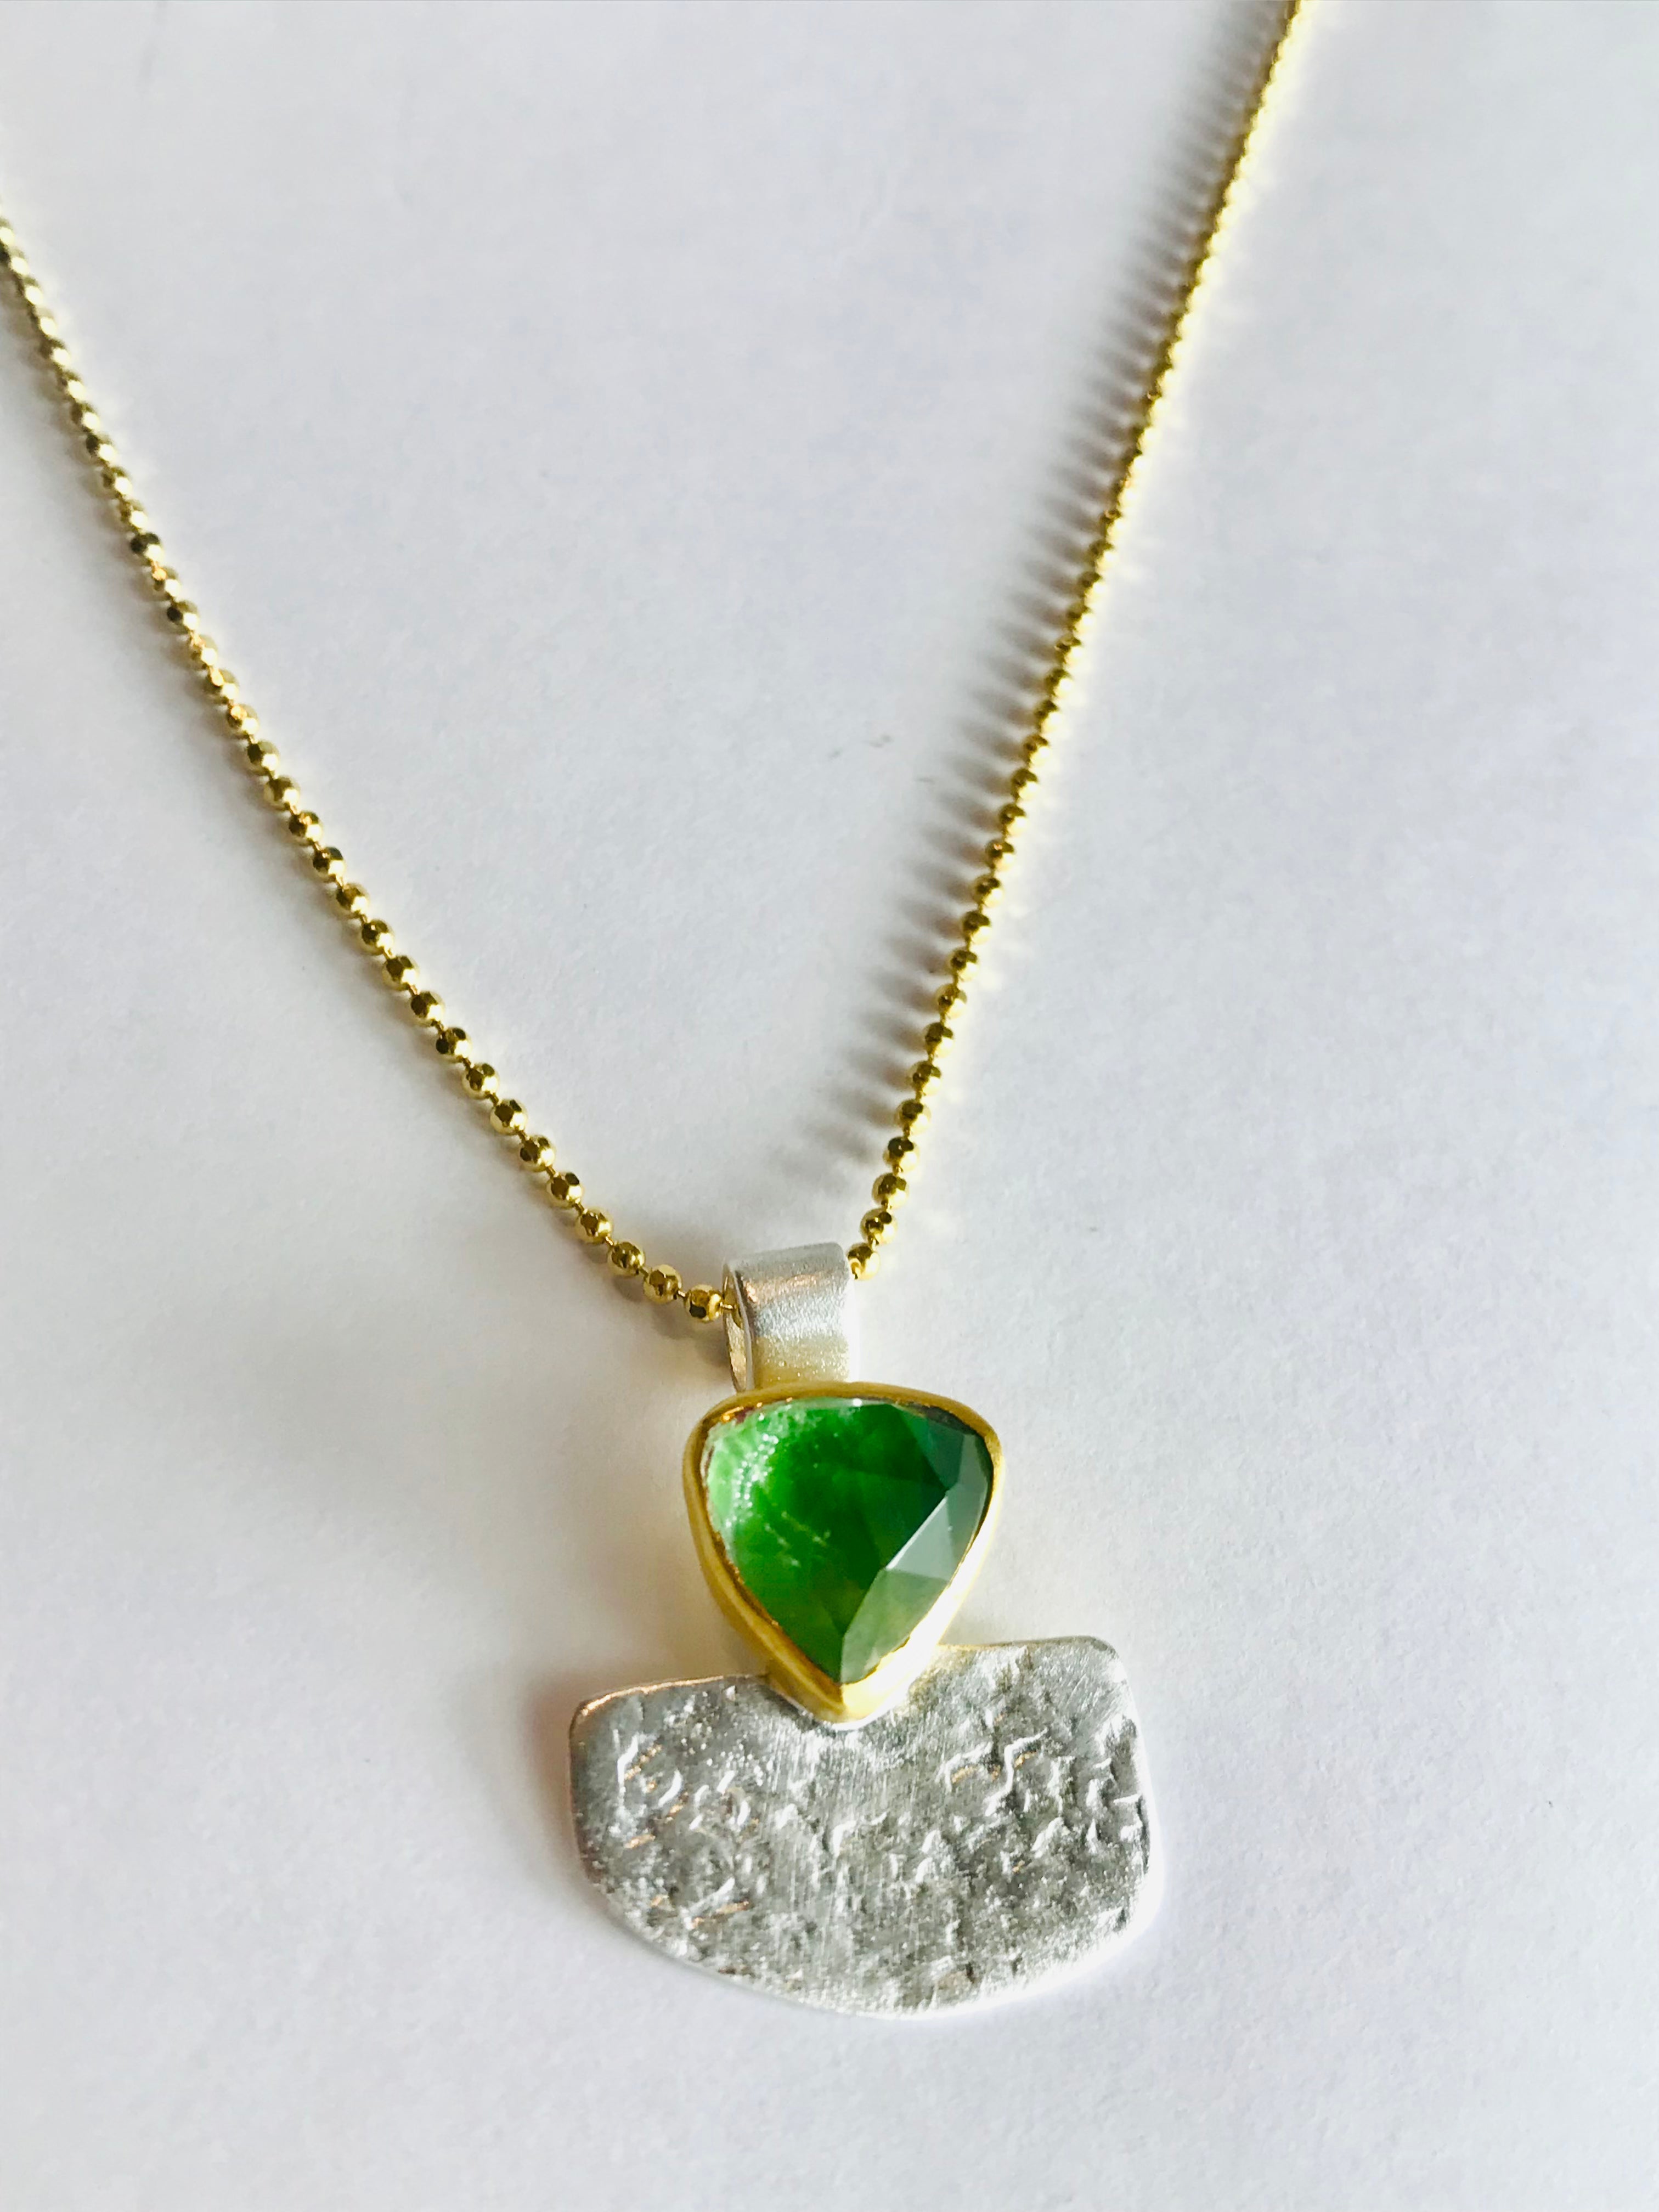 Green Digotase Necklace Natural Gemstone - The Nancy Smillie Shop - Art, Jewellery & Designer Gifts Glasgow